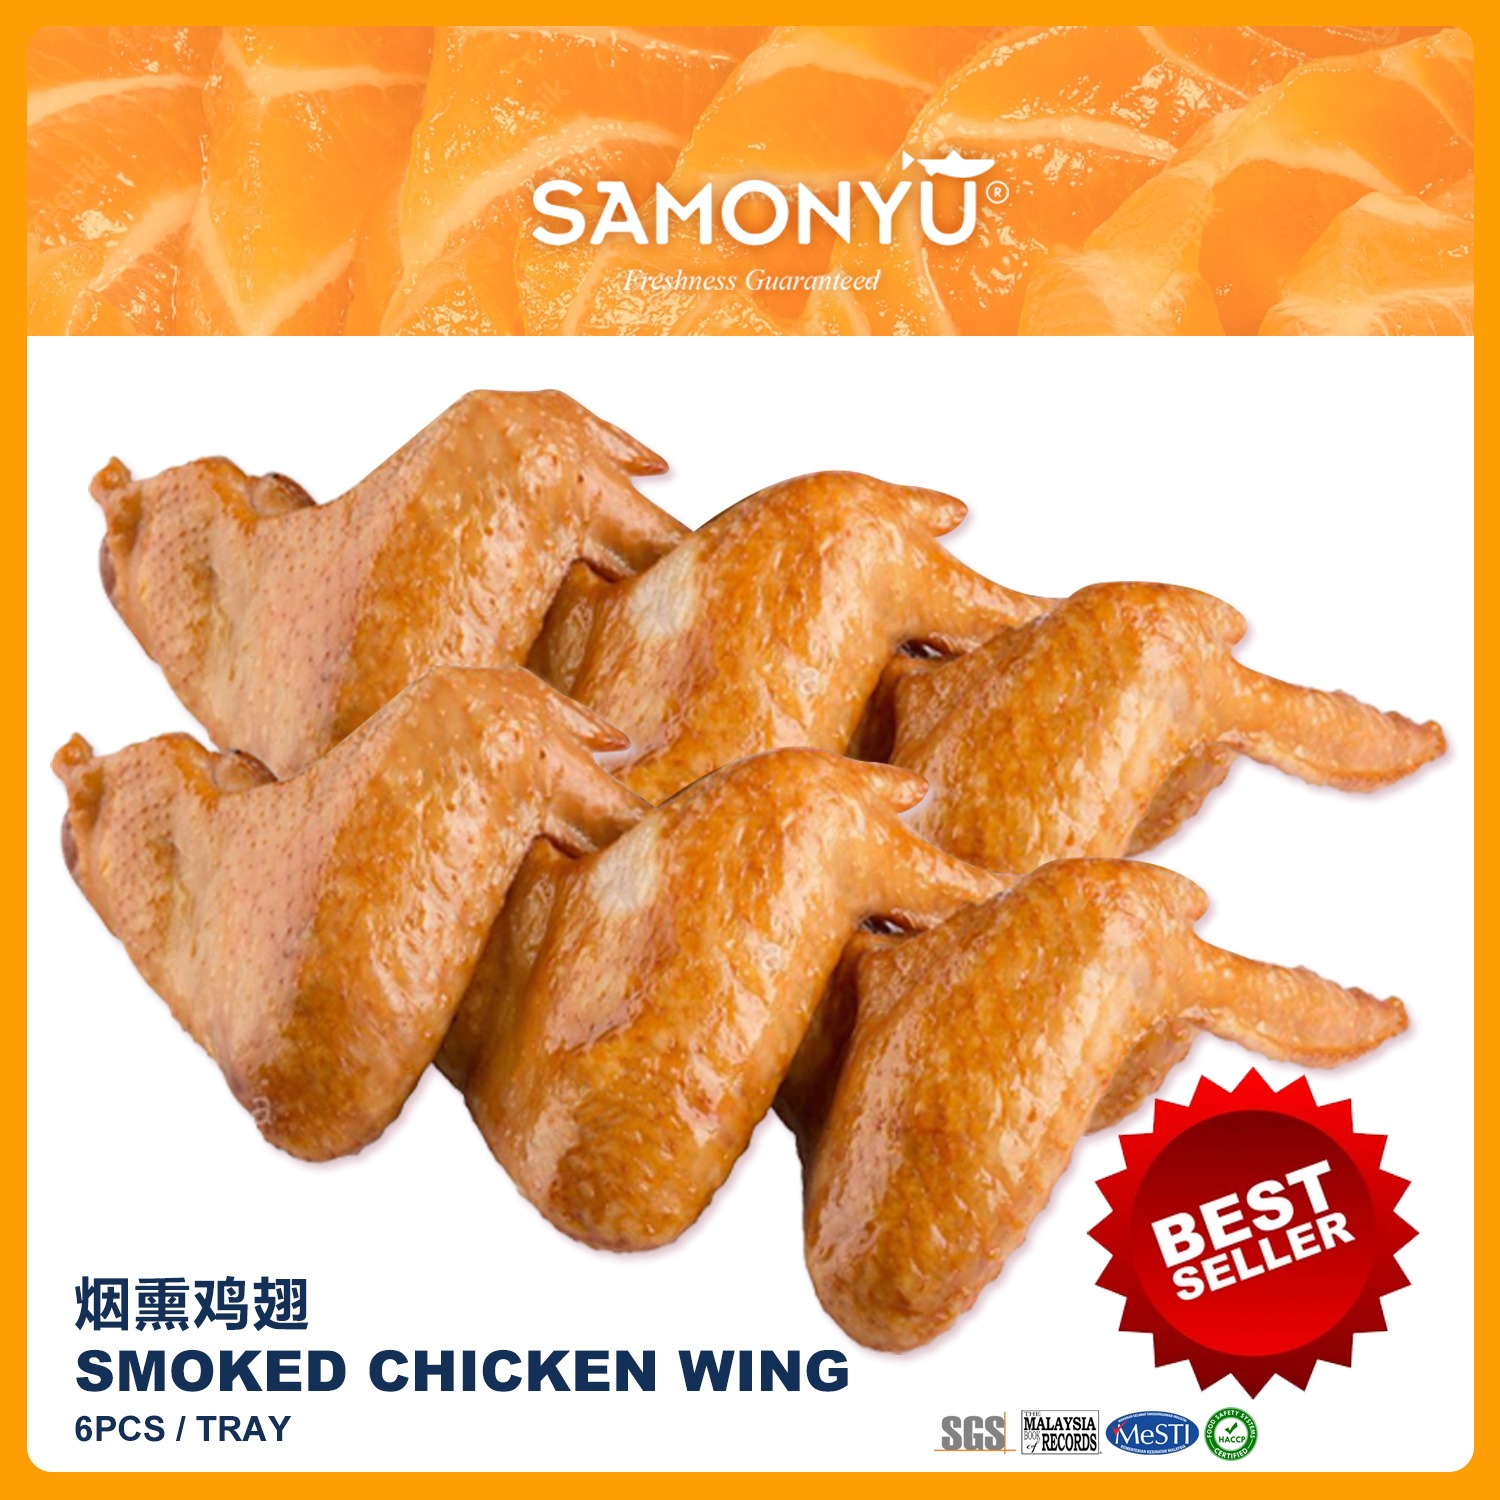 Smoky Chicken Wing (6pcs / Tray)